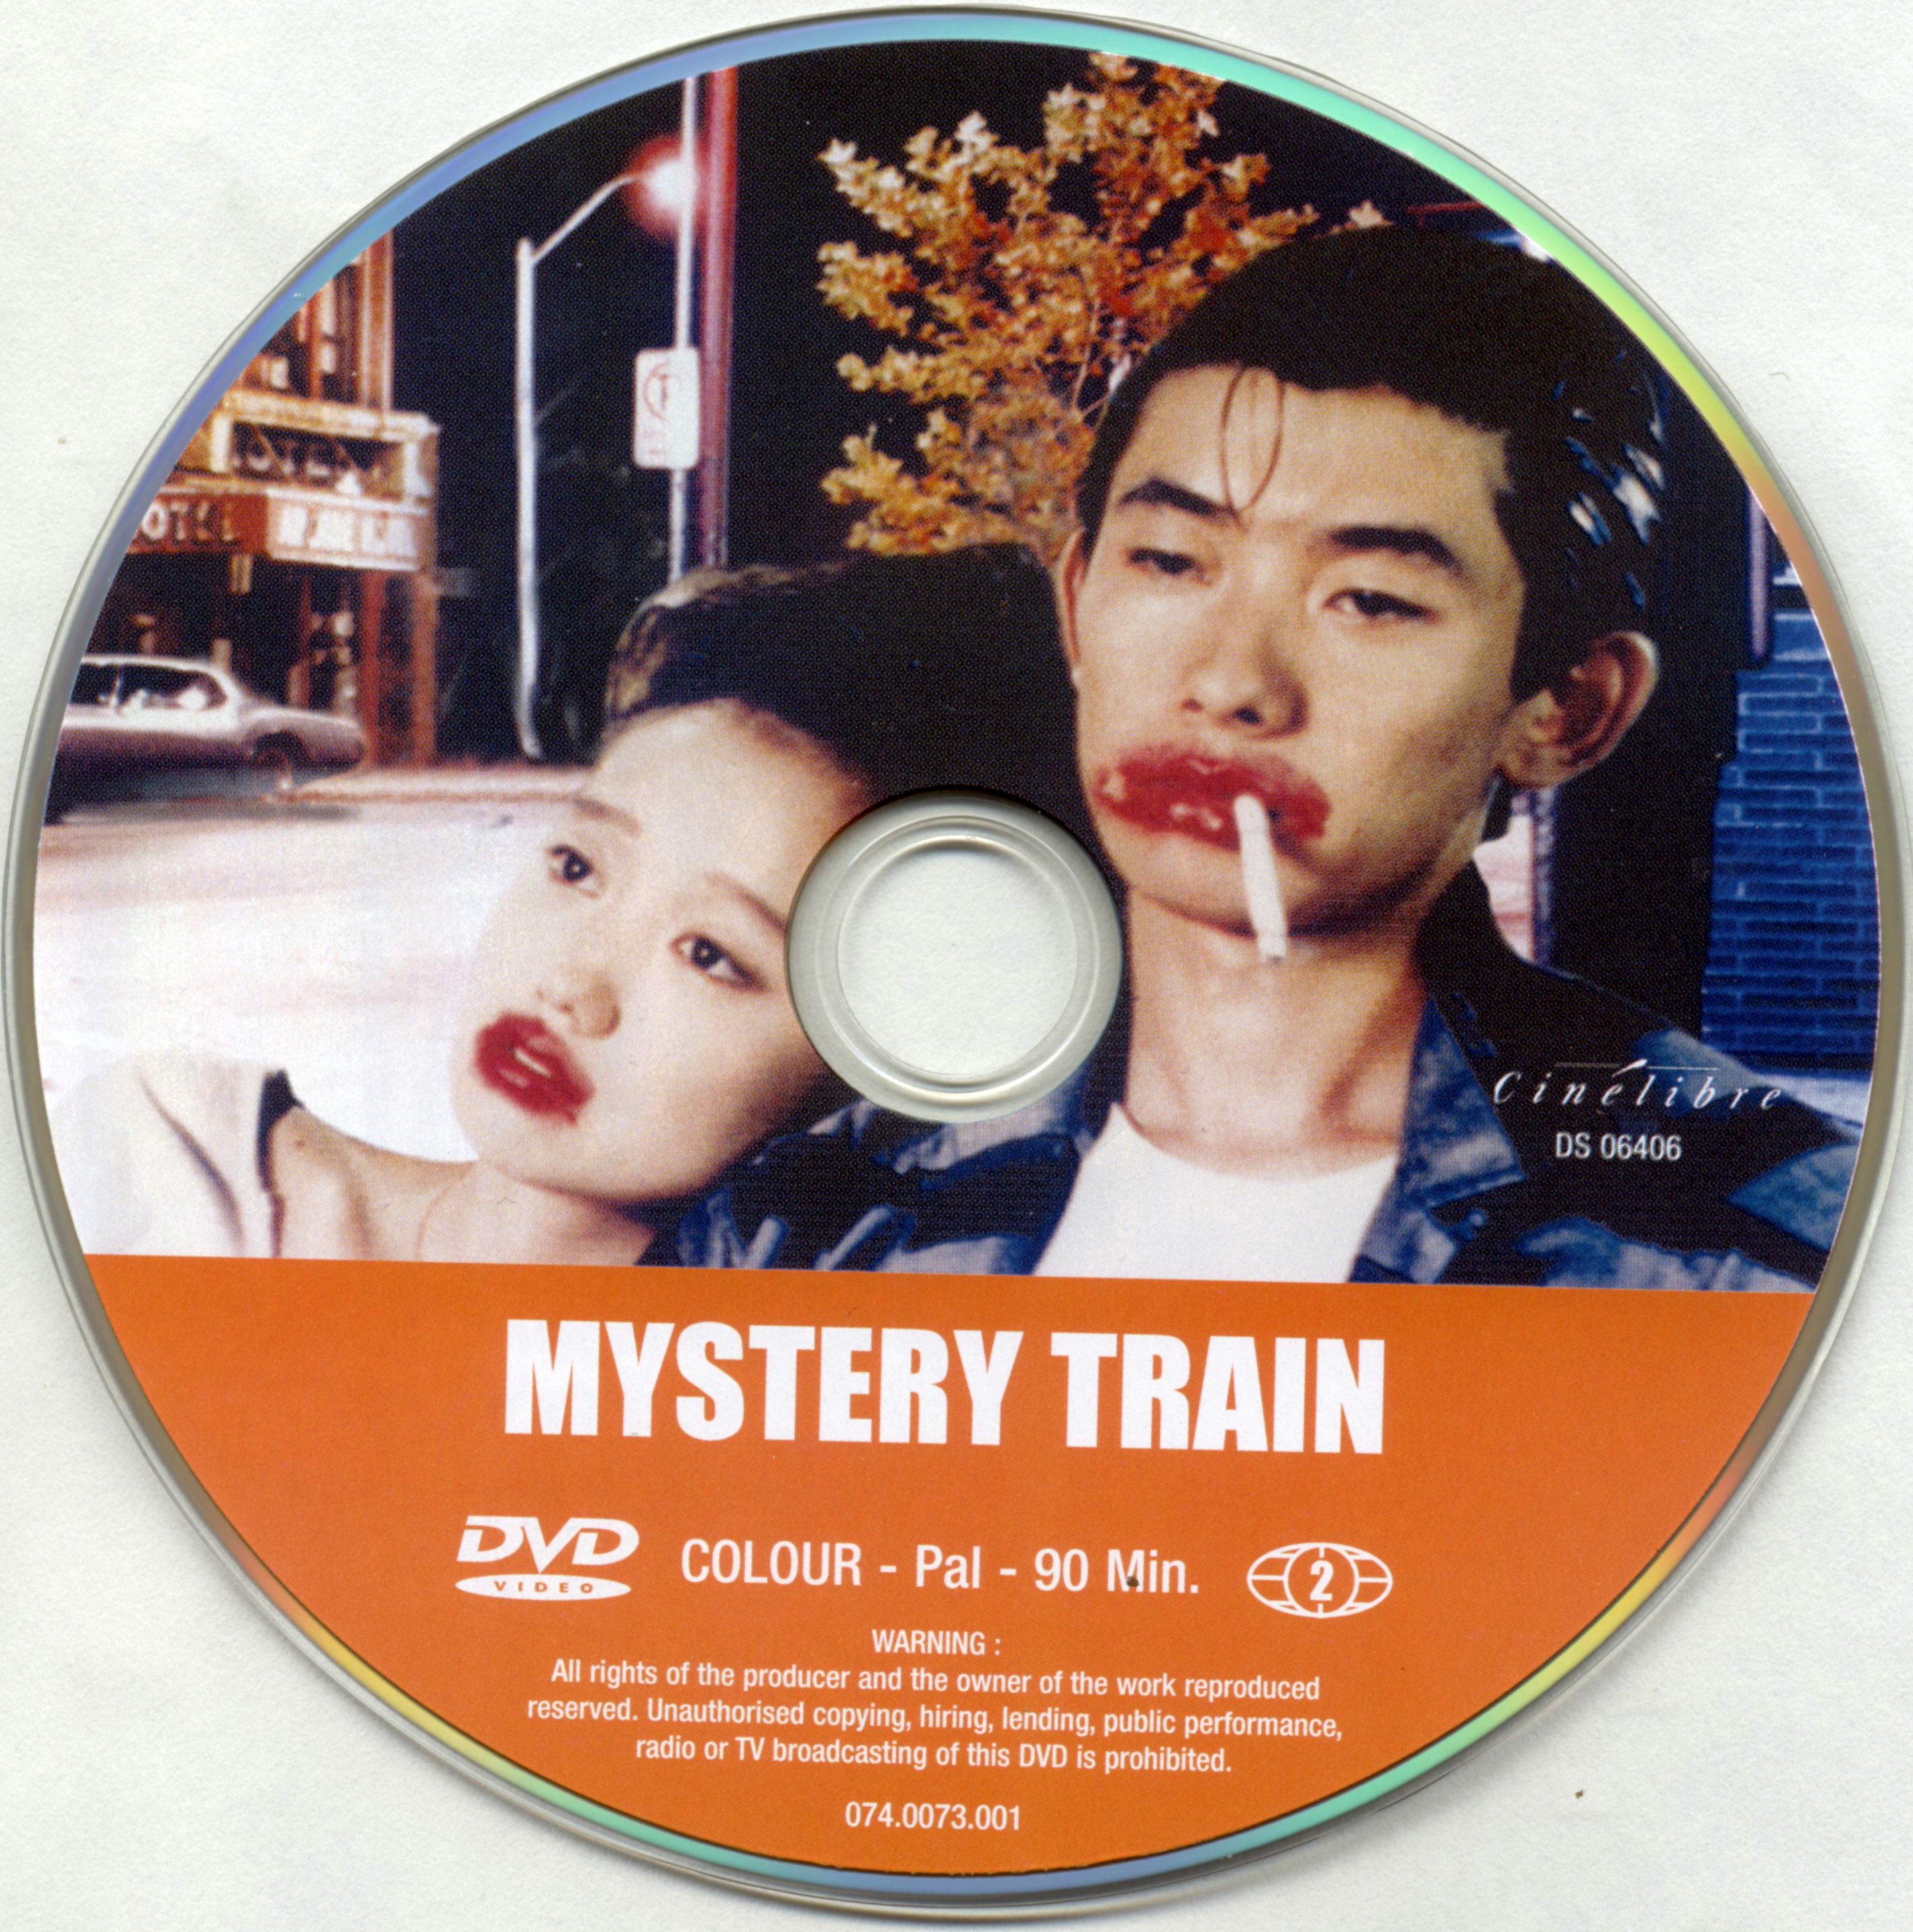 Mystery train